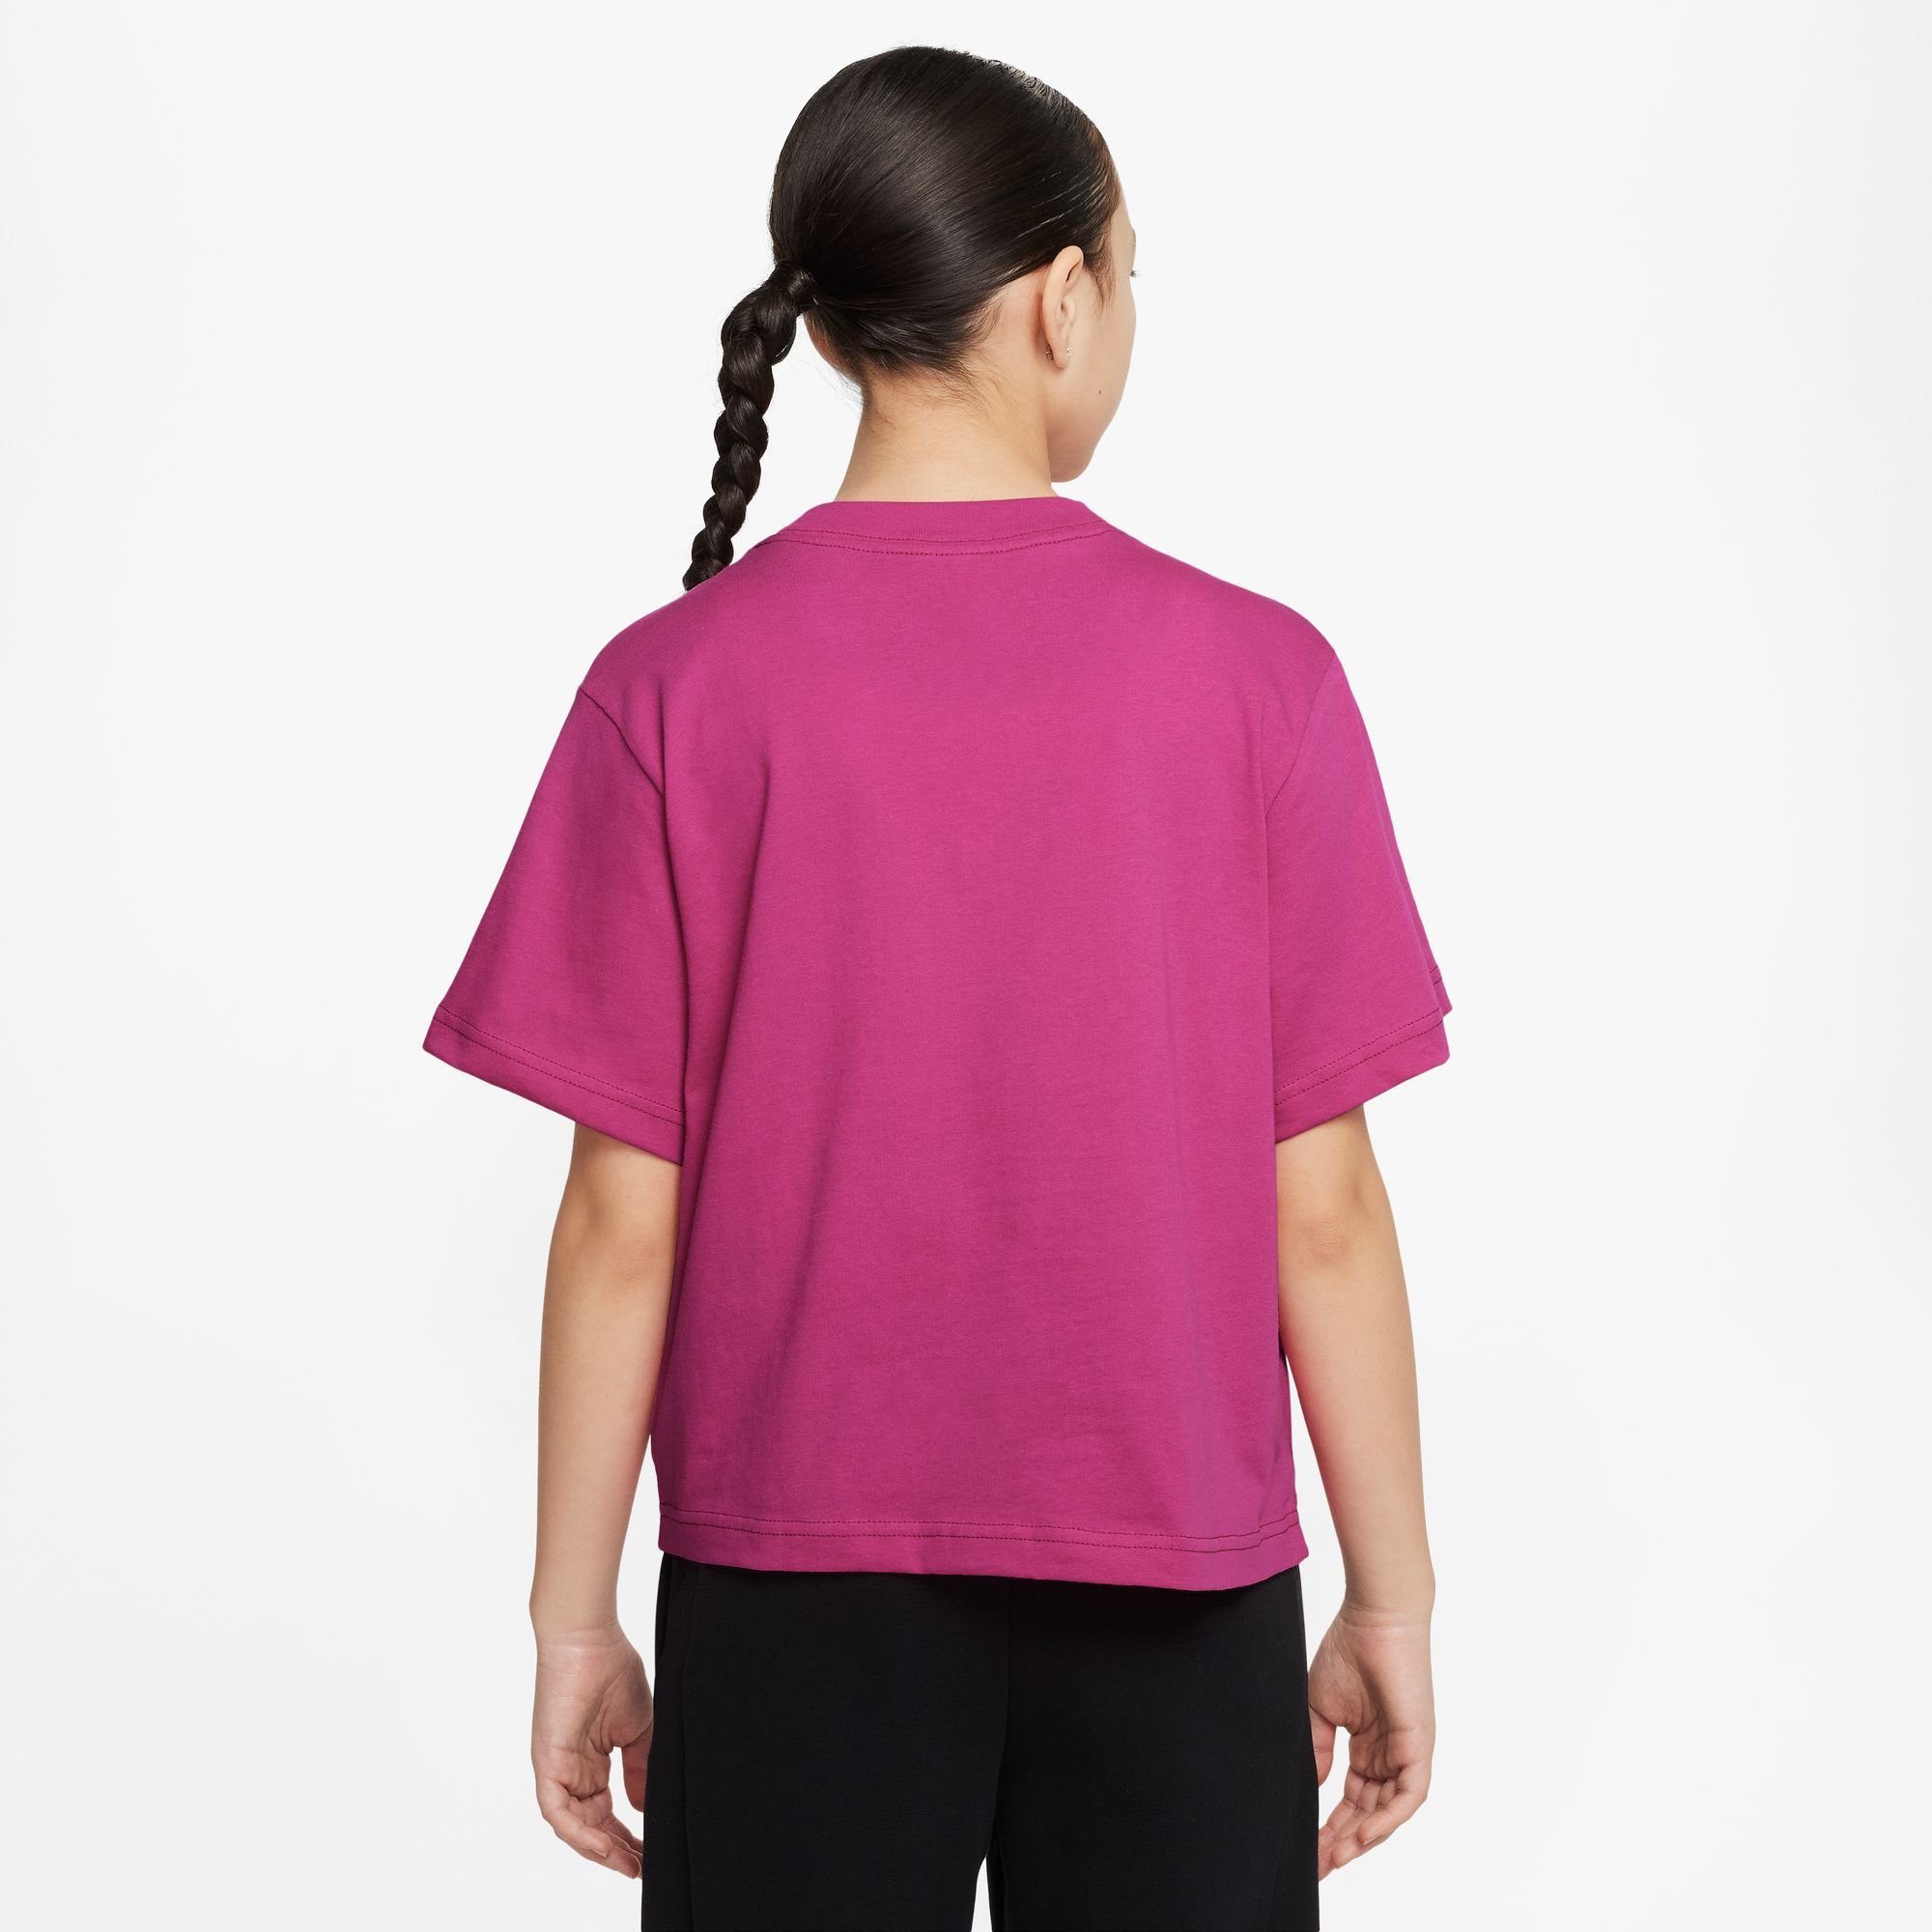 FIREBERRY KIDS' BIG (GIRLS) Nike T-SHIRT Sportswear T-Shirt